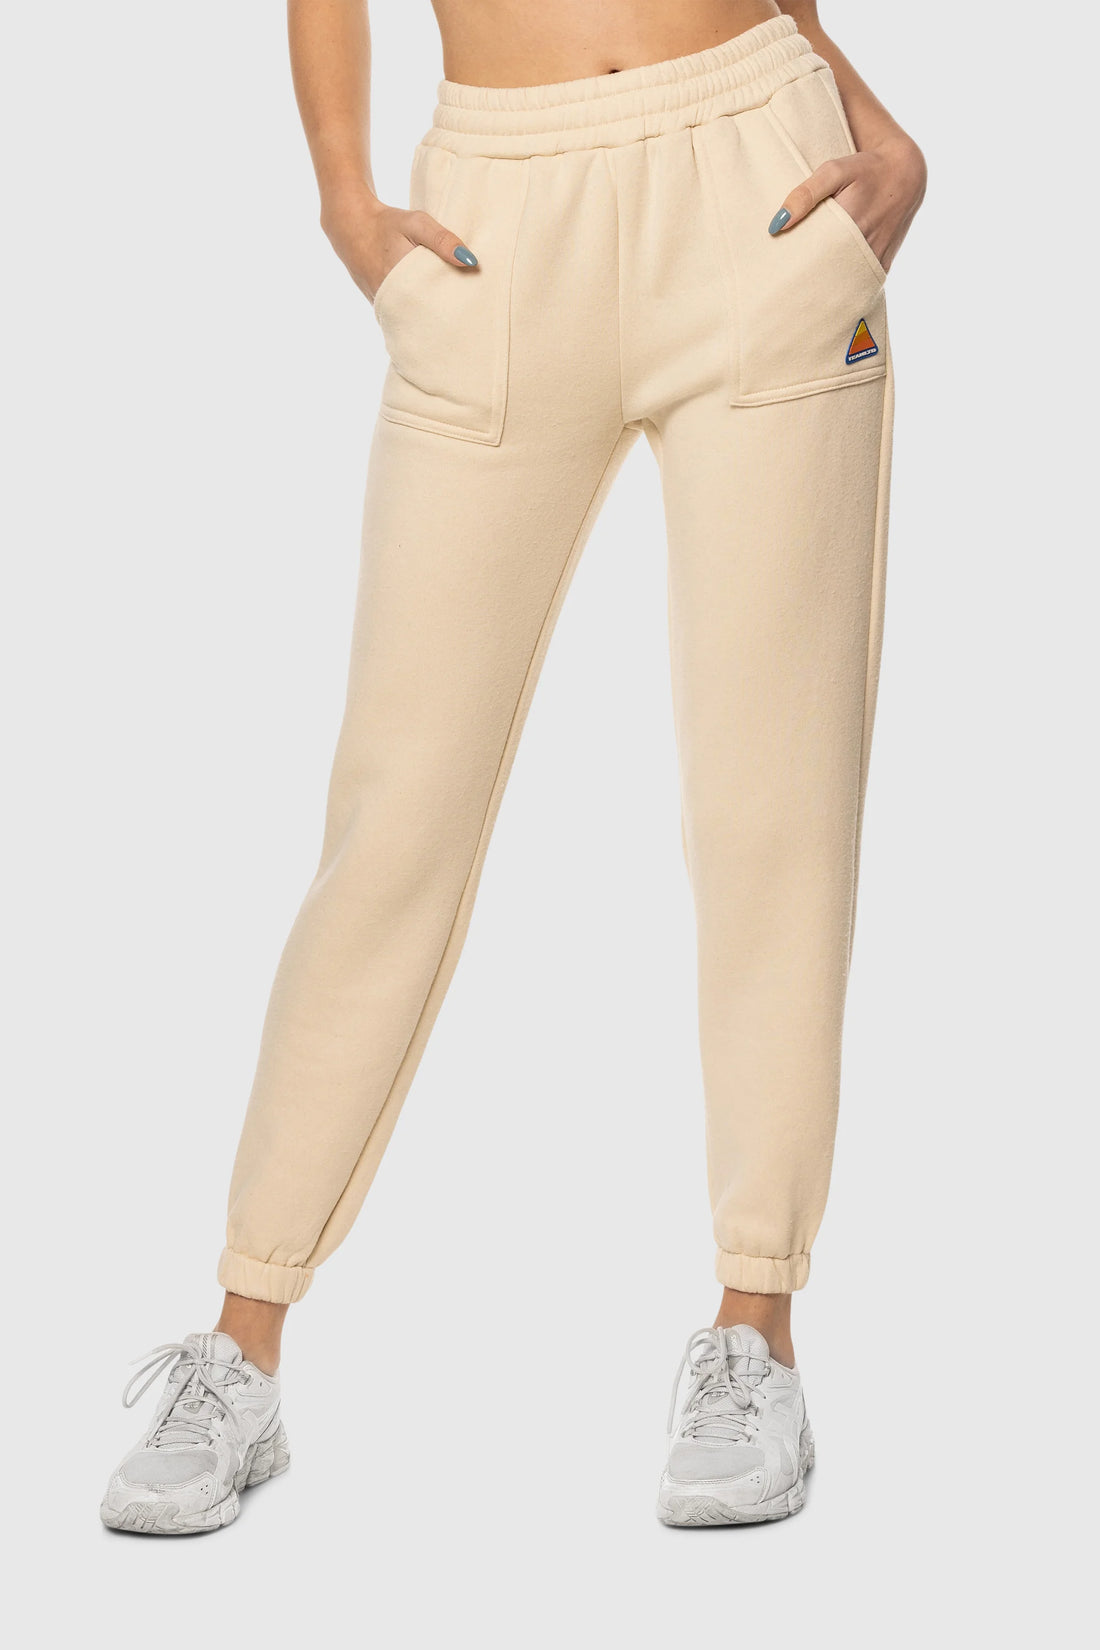 Buy Cream Track Pants for Women by Teamspirit Online